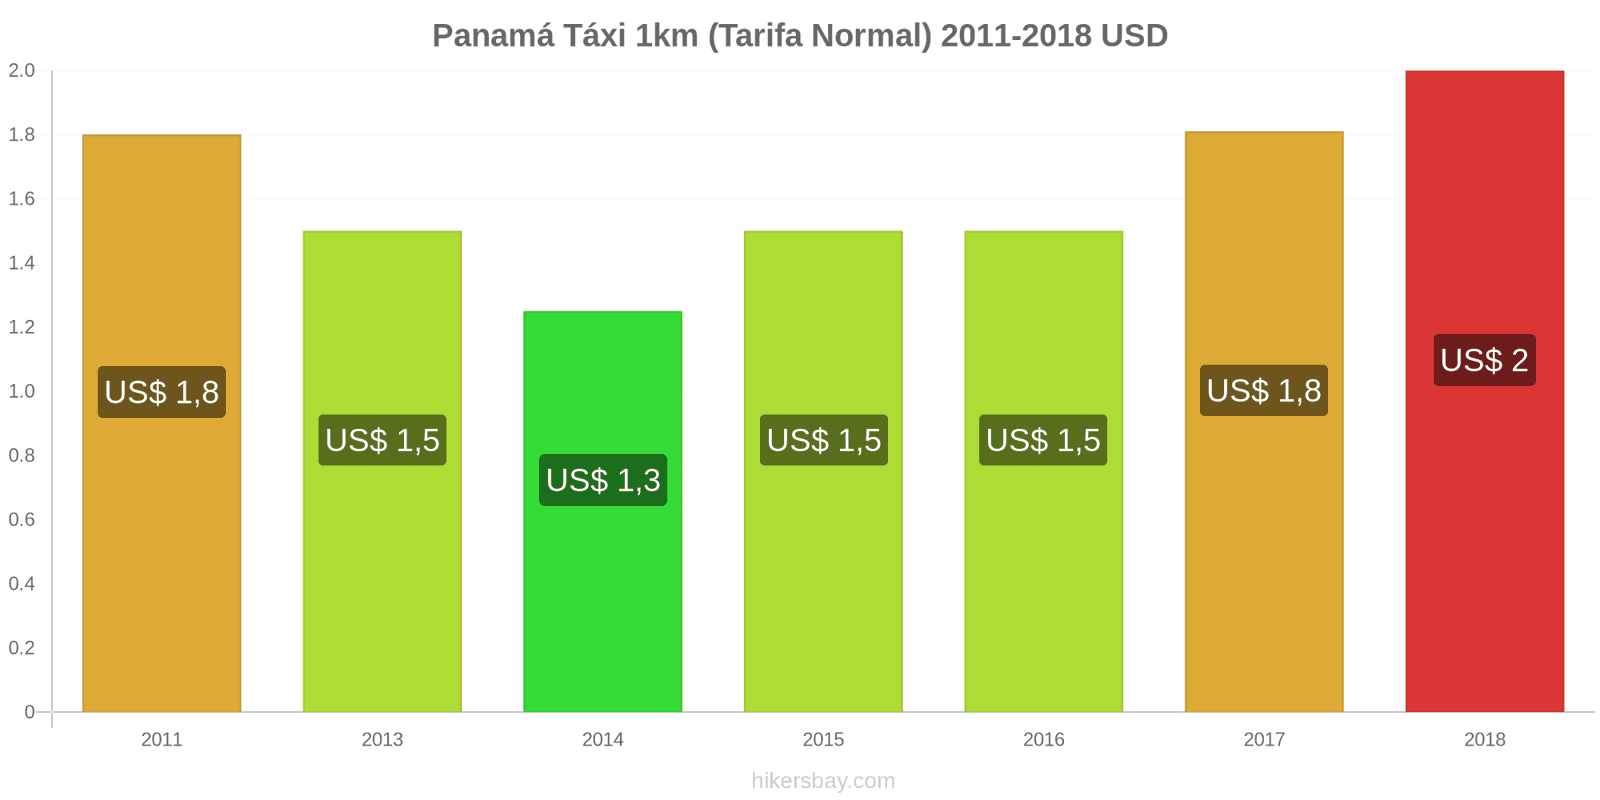 Panamá mudanças de preços Táxi 1km (Tarifa Normal) hikersbay.com